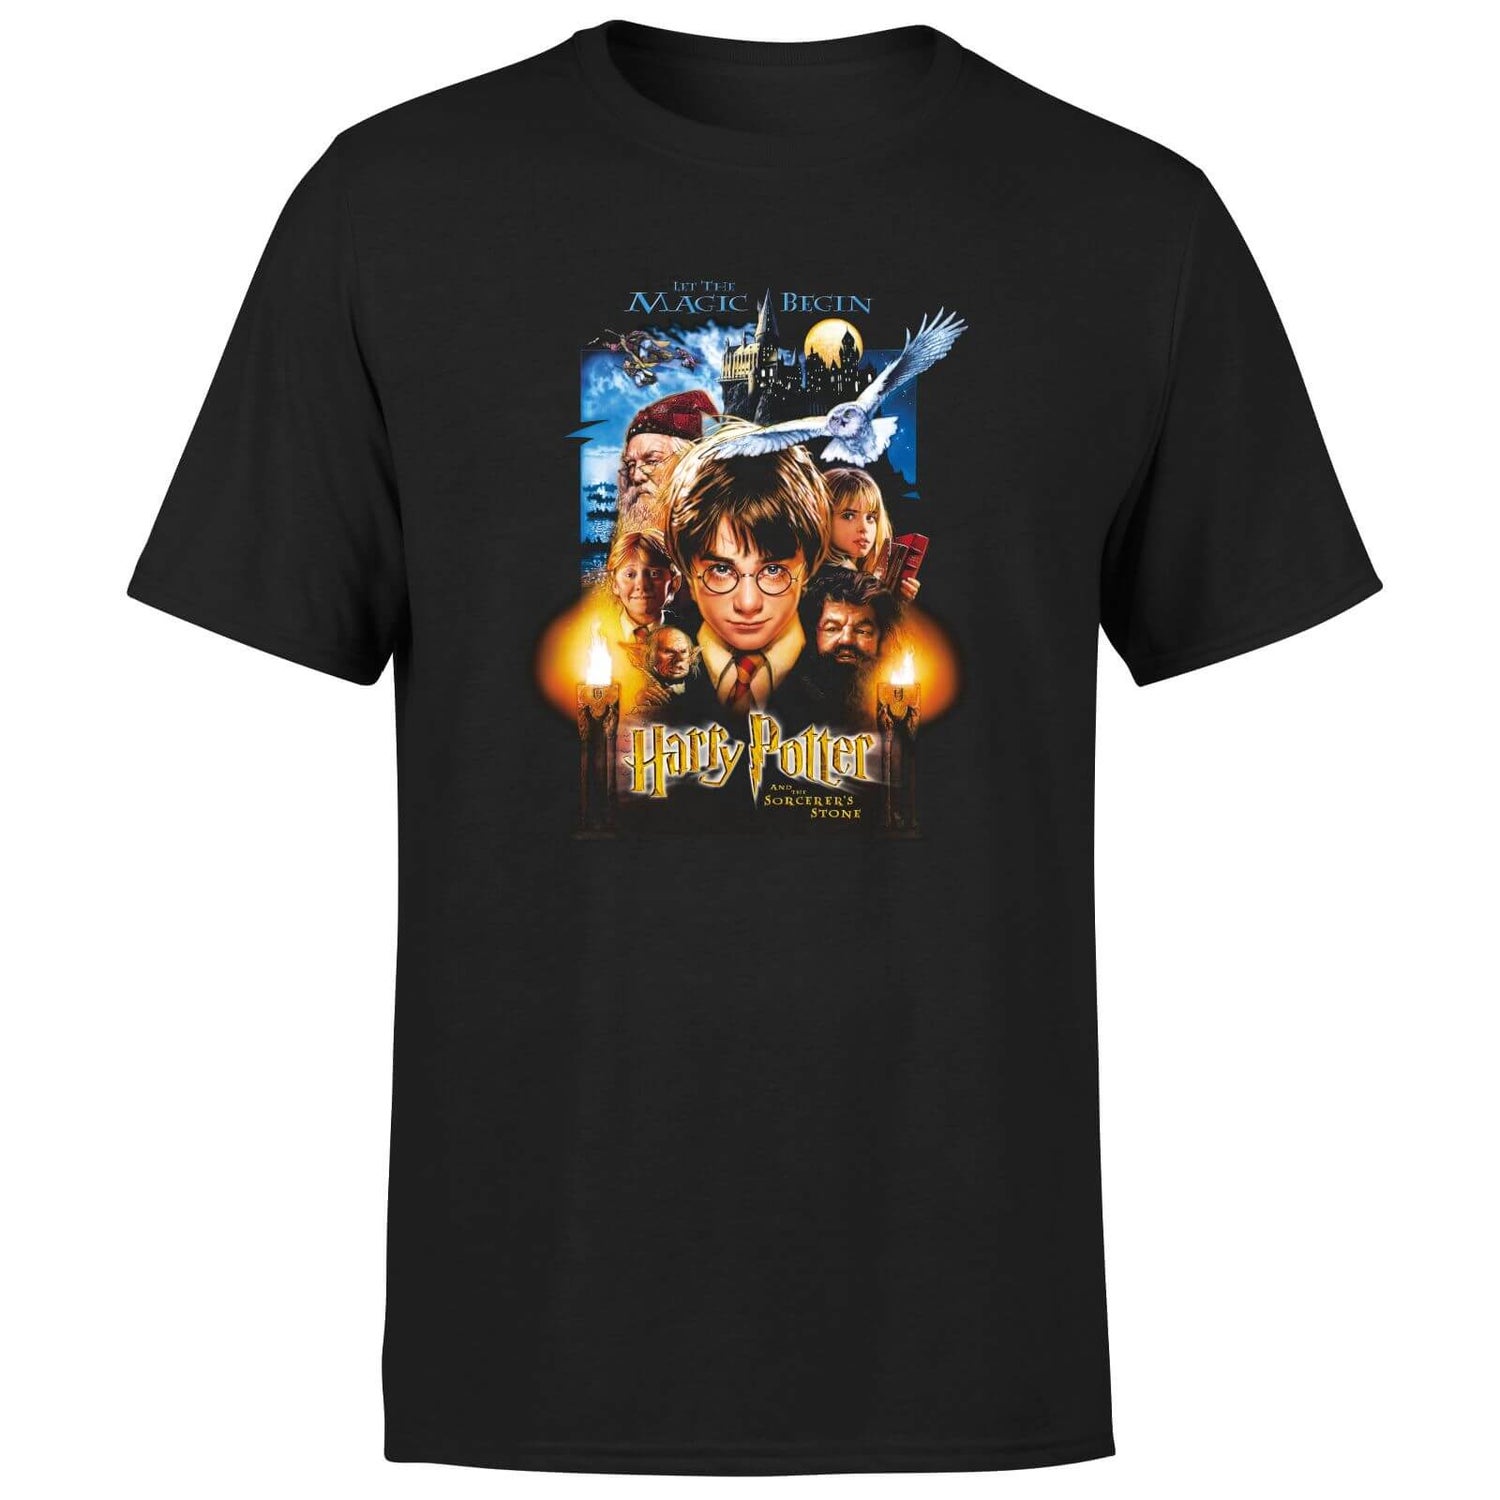 Harry Potter The Sorcerer's Stone Unisex T-Shirt - Black